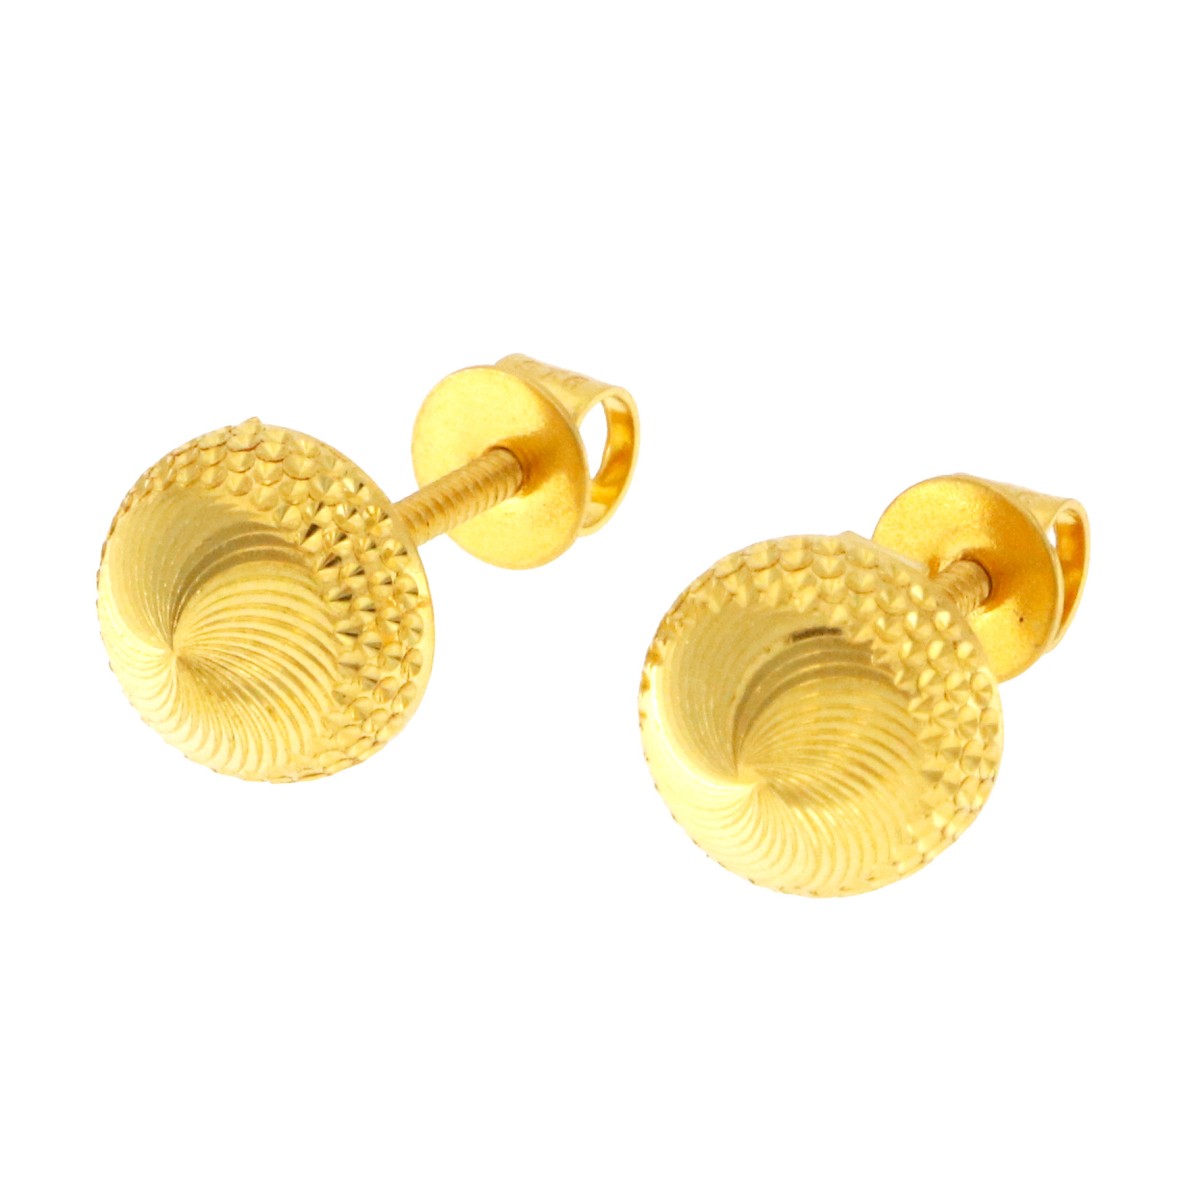 22ct Gold Stud Earrings